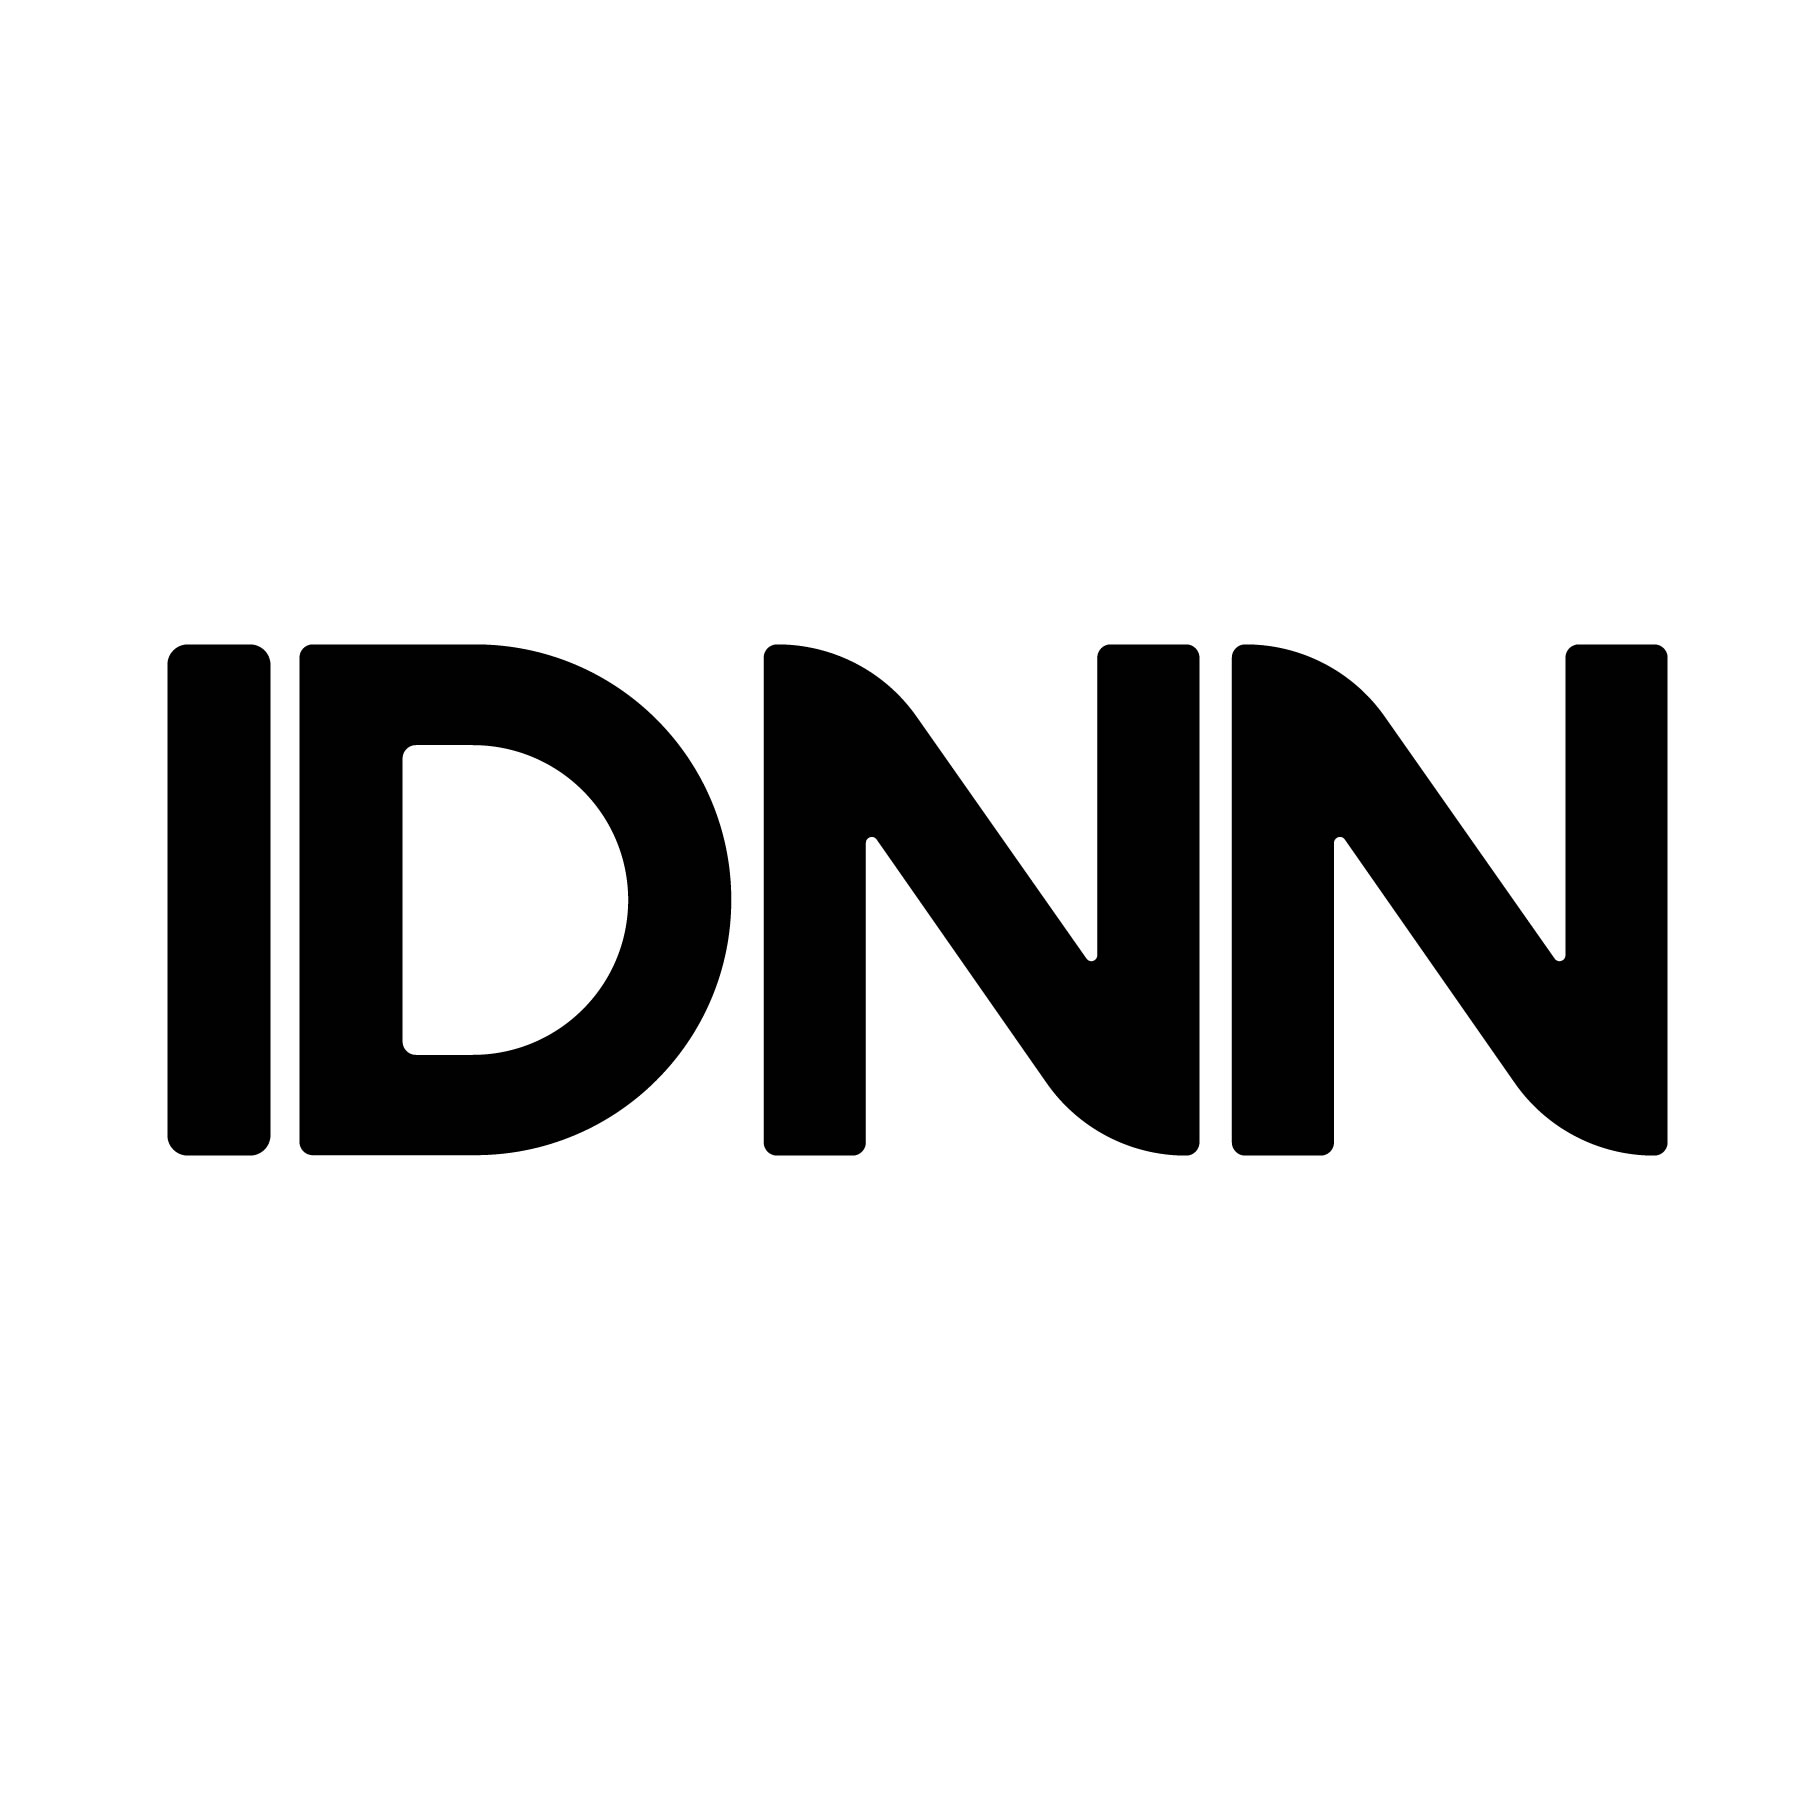 logo of the IDNN